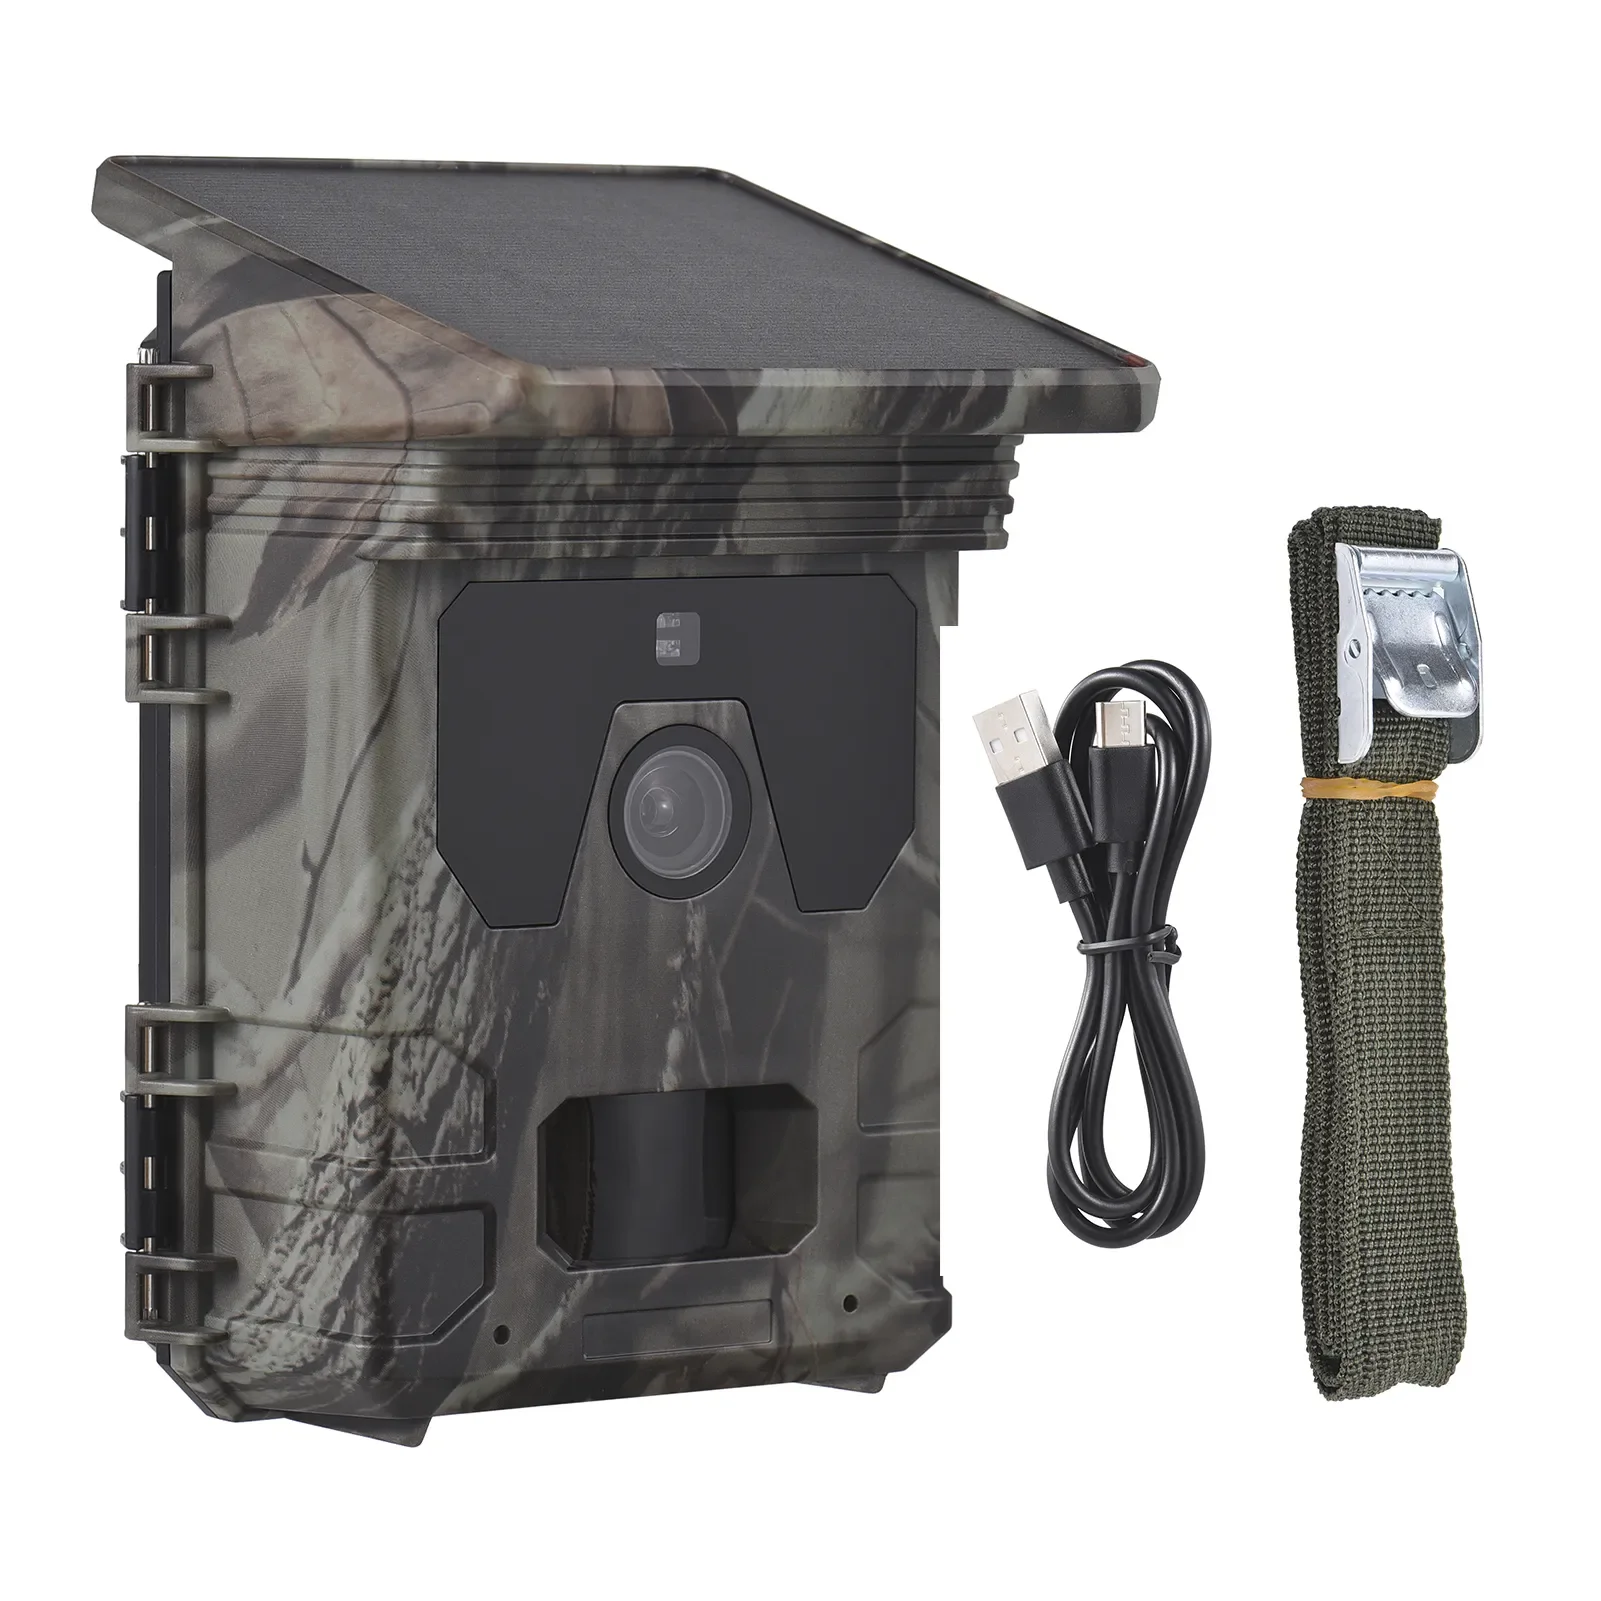  DXLG Cámara de caza de vida silvestre PR600/PR600A/PR600B Trace Cámara  de seguimiento Hd 12M 20Mp visión nocturna al aire libre 38 Monitoreo de  luz infrarroja Mini cámara infrarroja al aire libre (